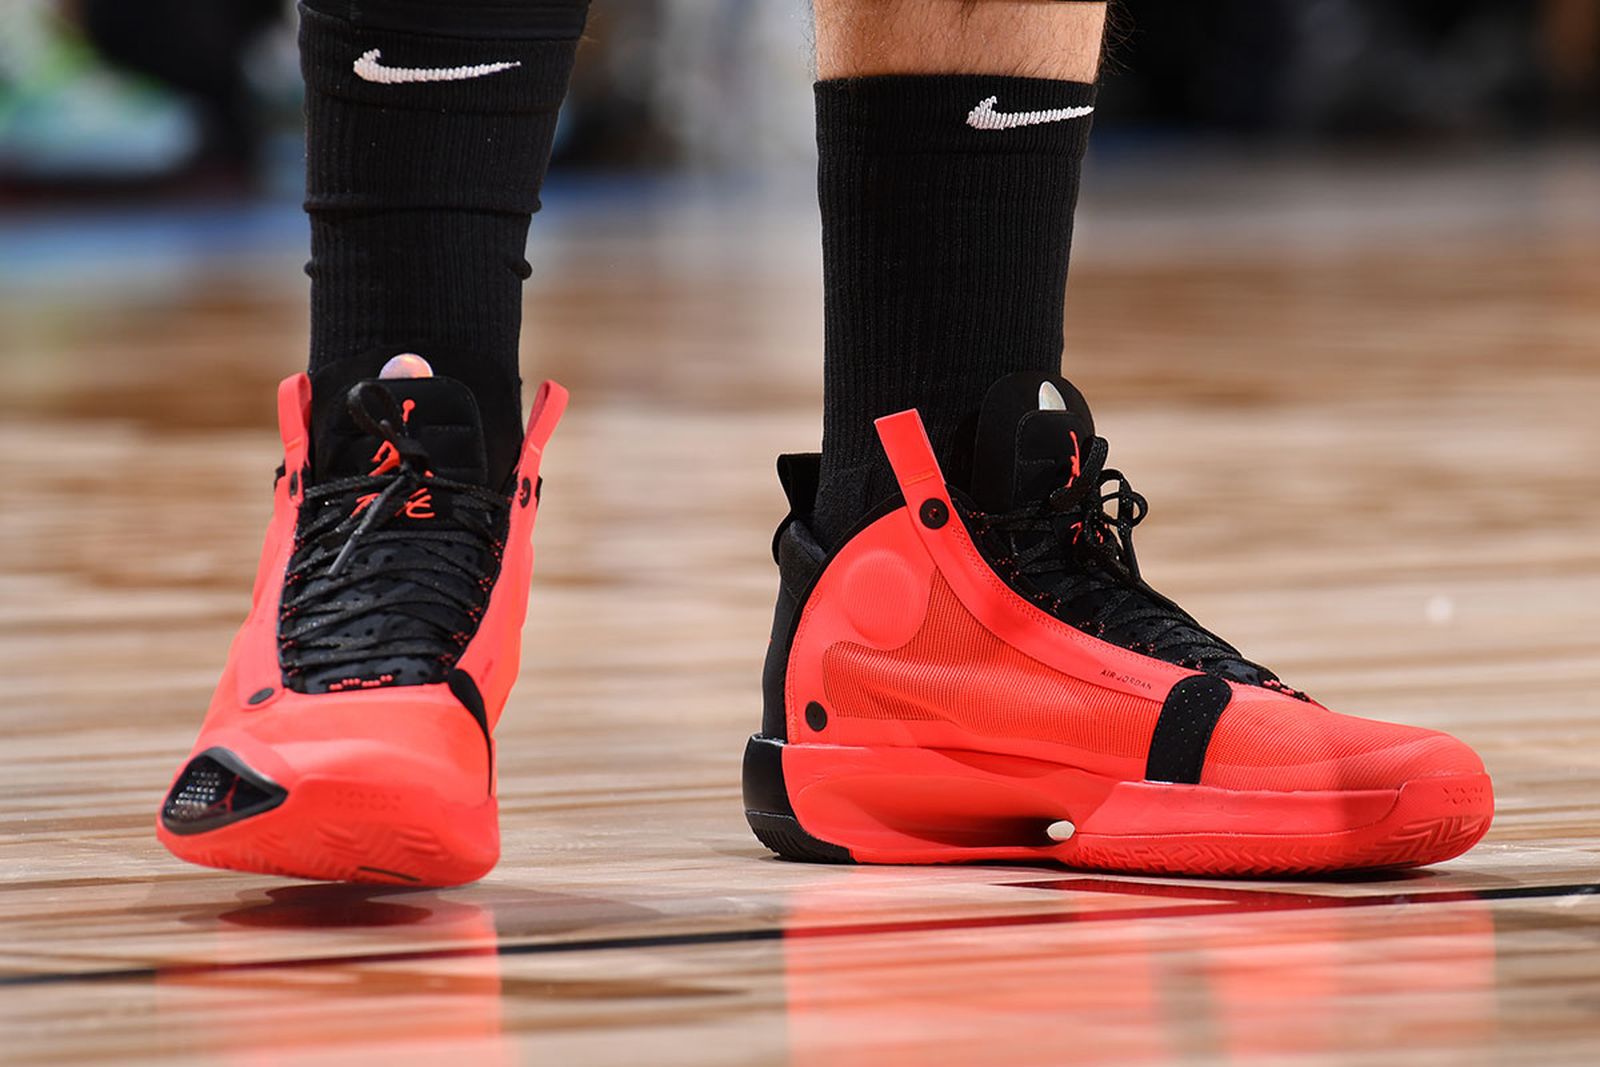 lucha eximir plataforma Nike Air Jordan 34 “Infrared 23”: Official Images & Release Info